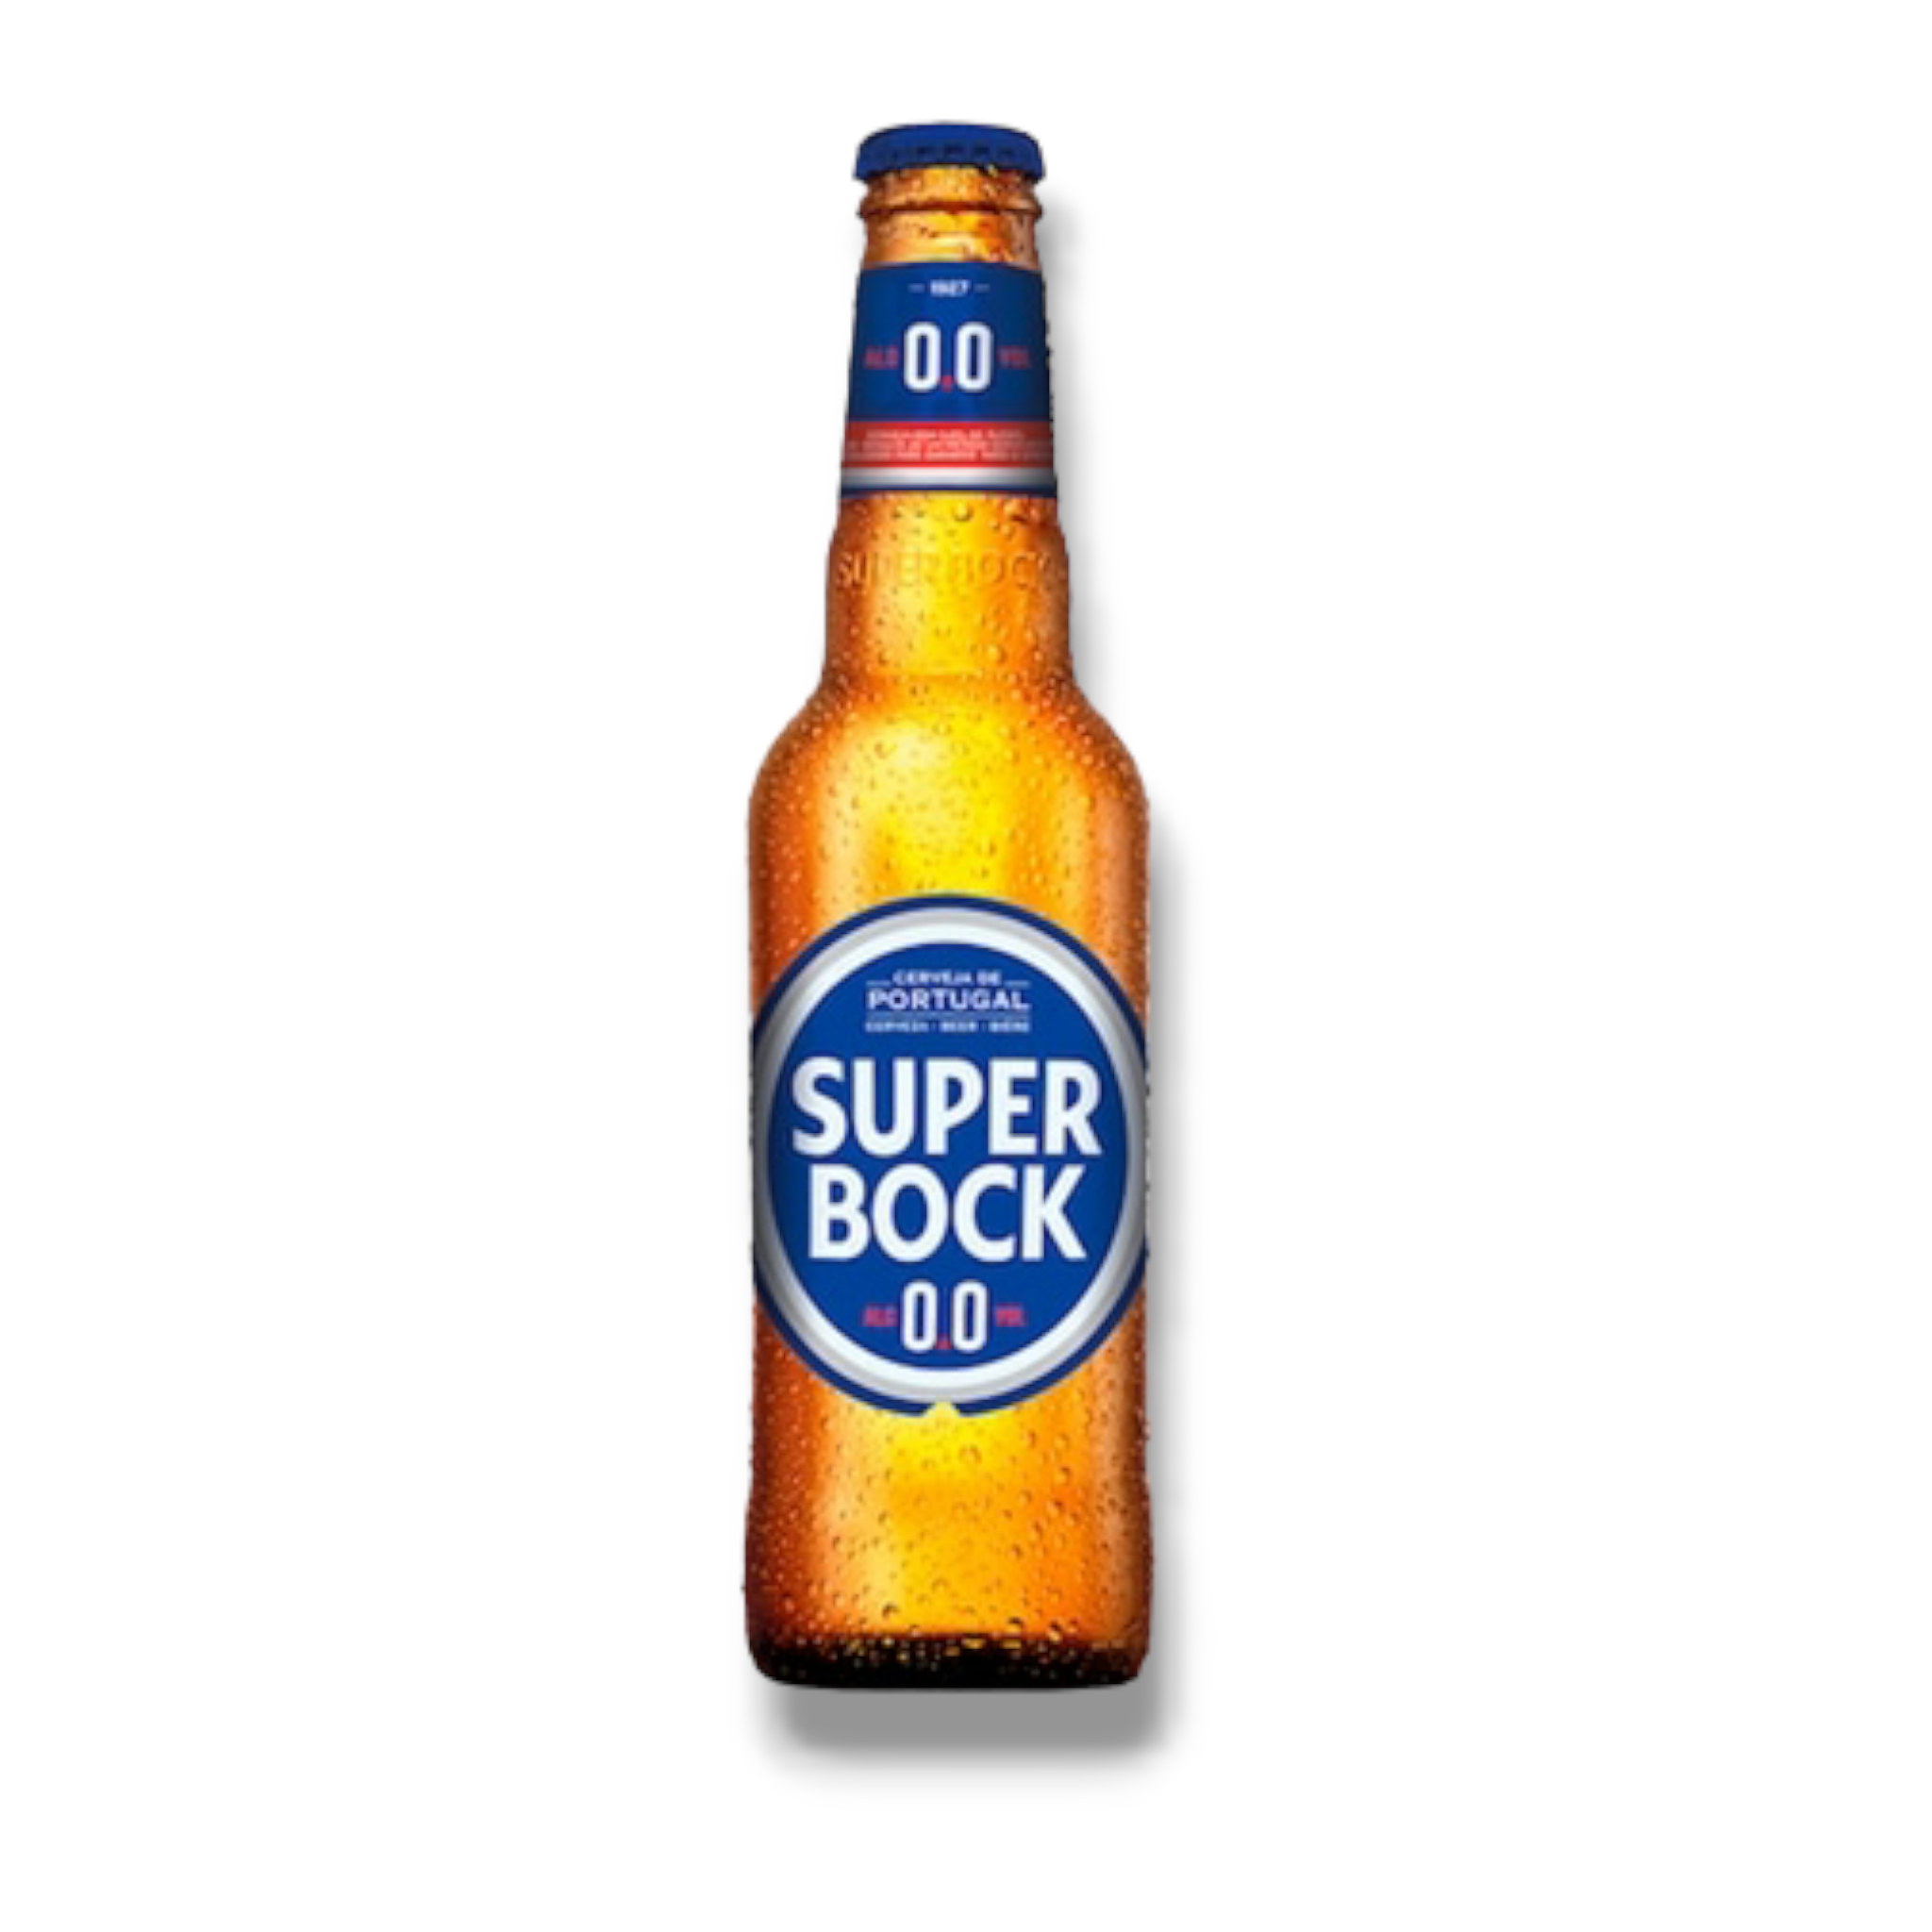 Super Bock alkoholfrei 0,33l- Das Original aus Portugal mit 0,0% Vol.